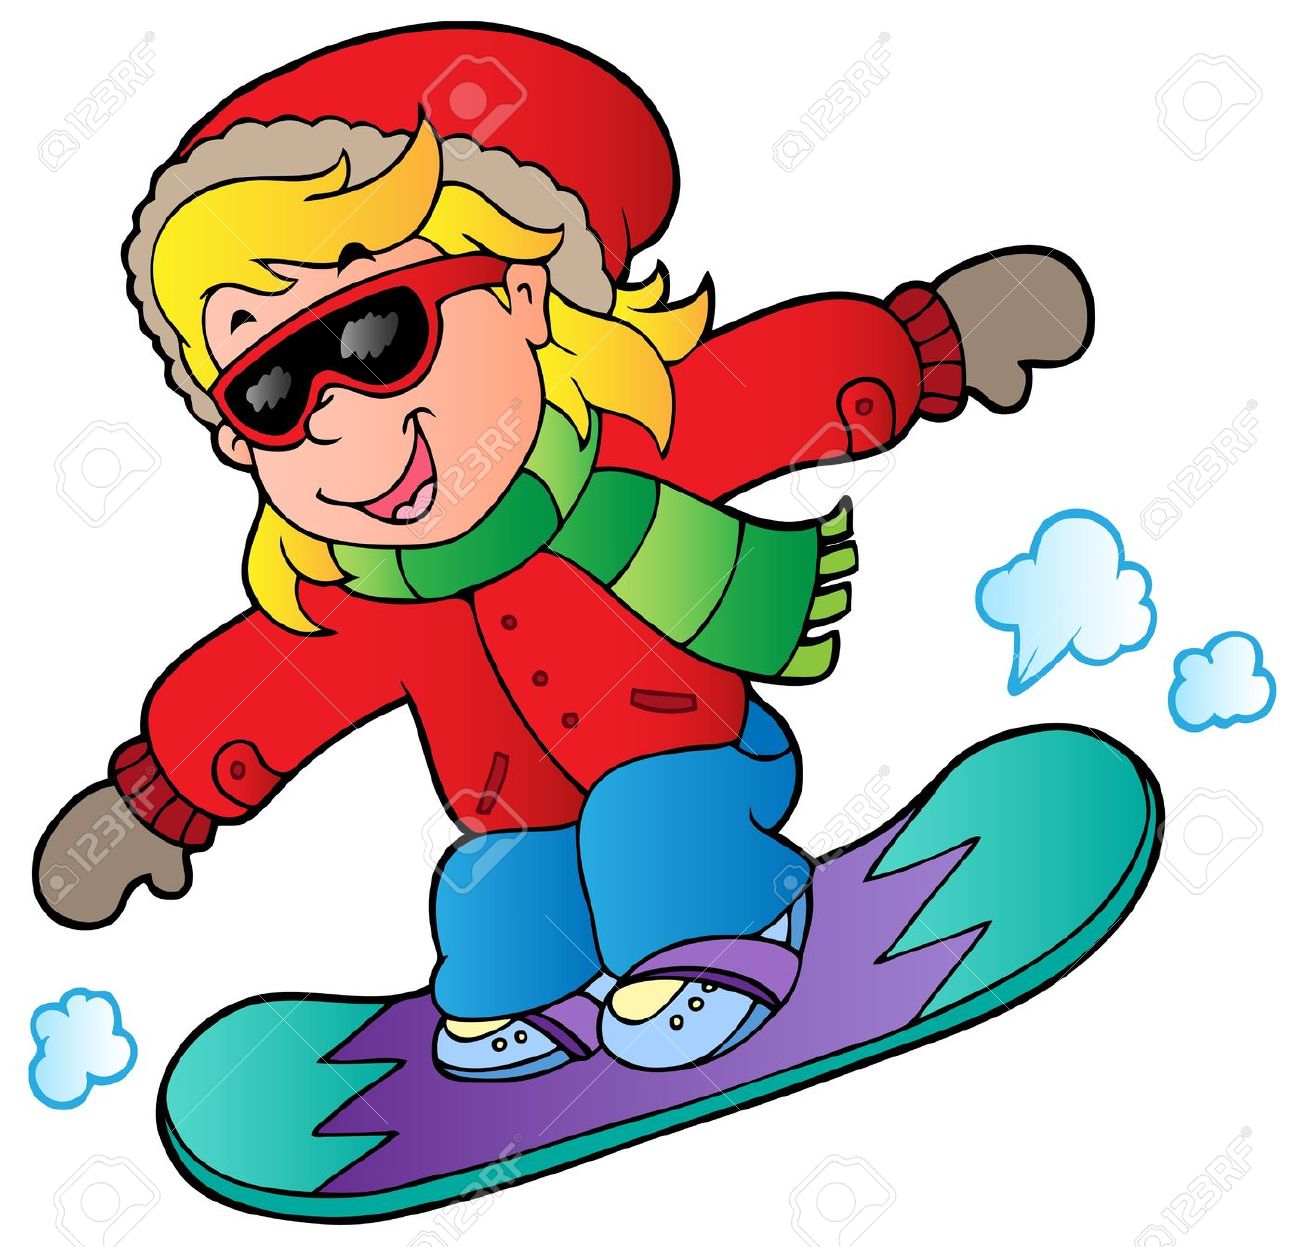 snowboard clipart sports clip art of a orange snowboarder by leo.